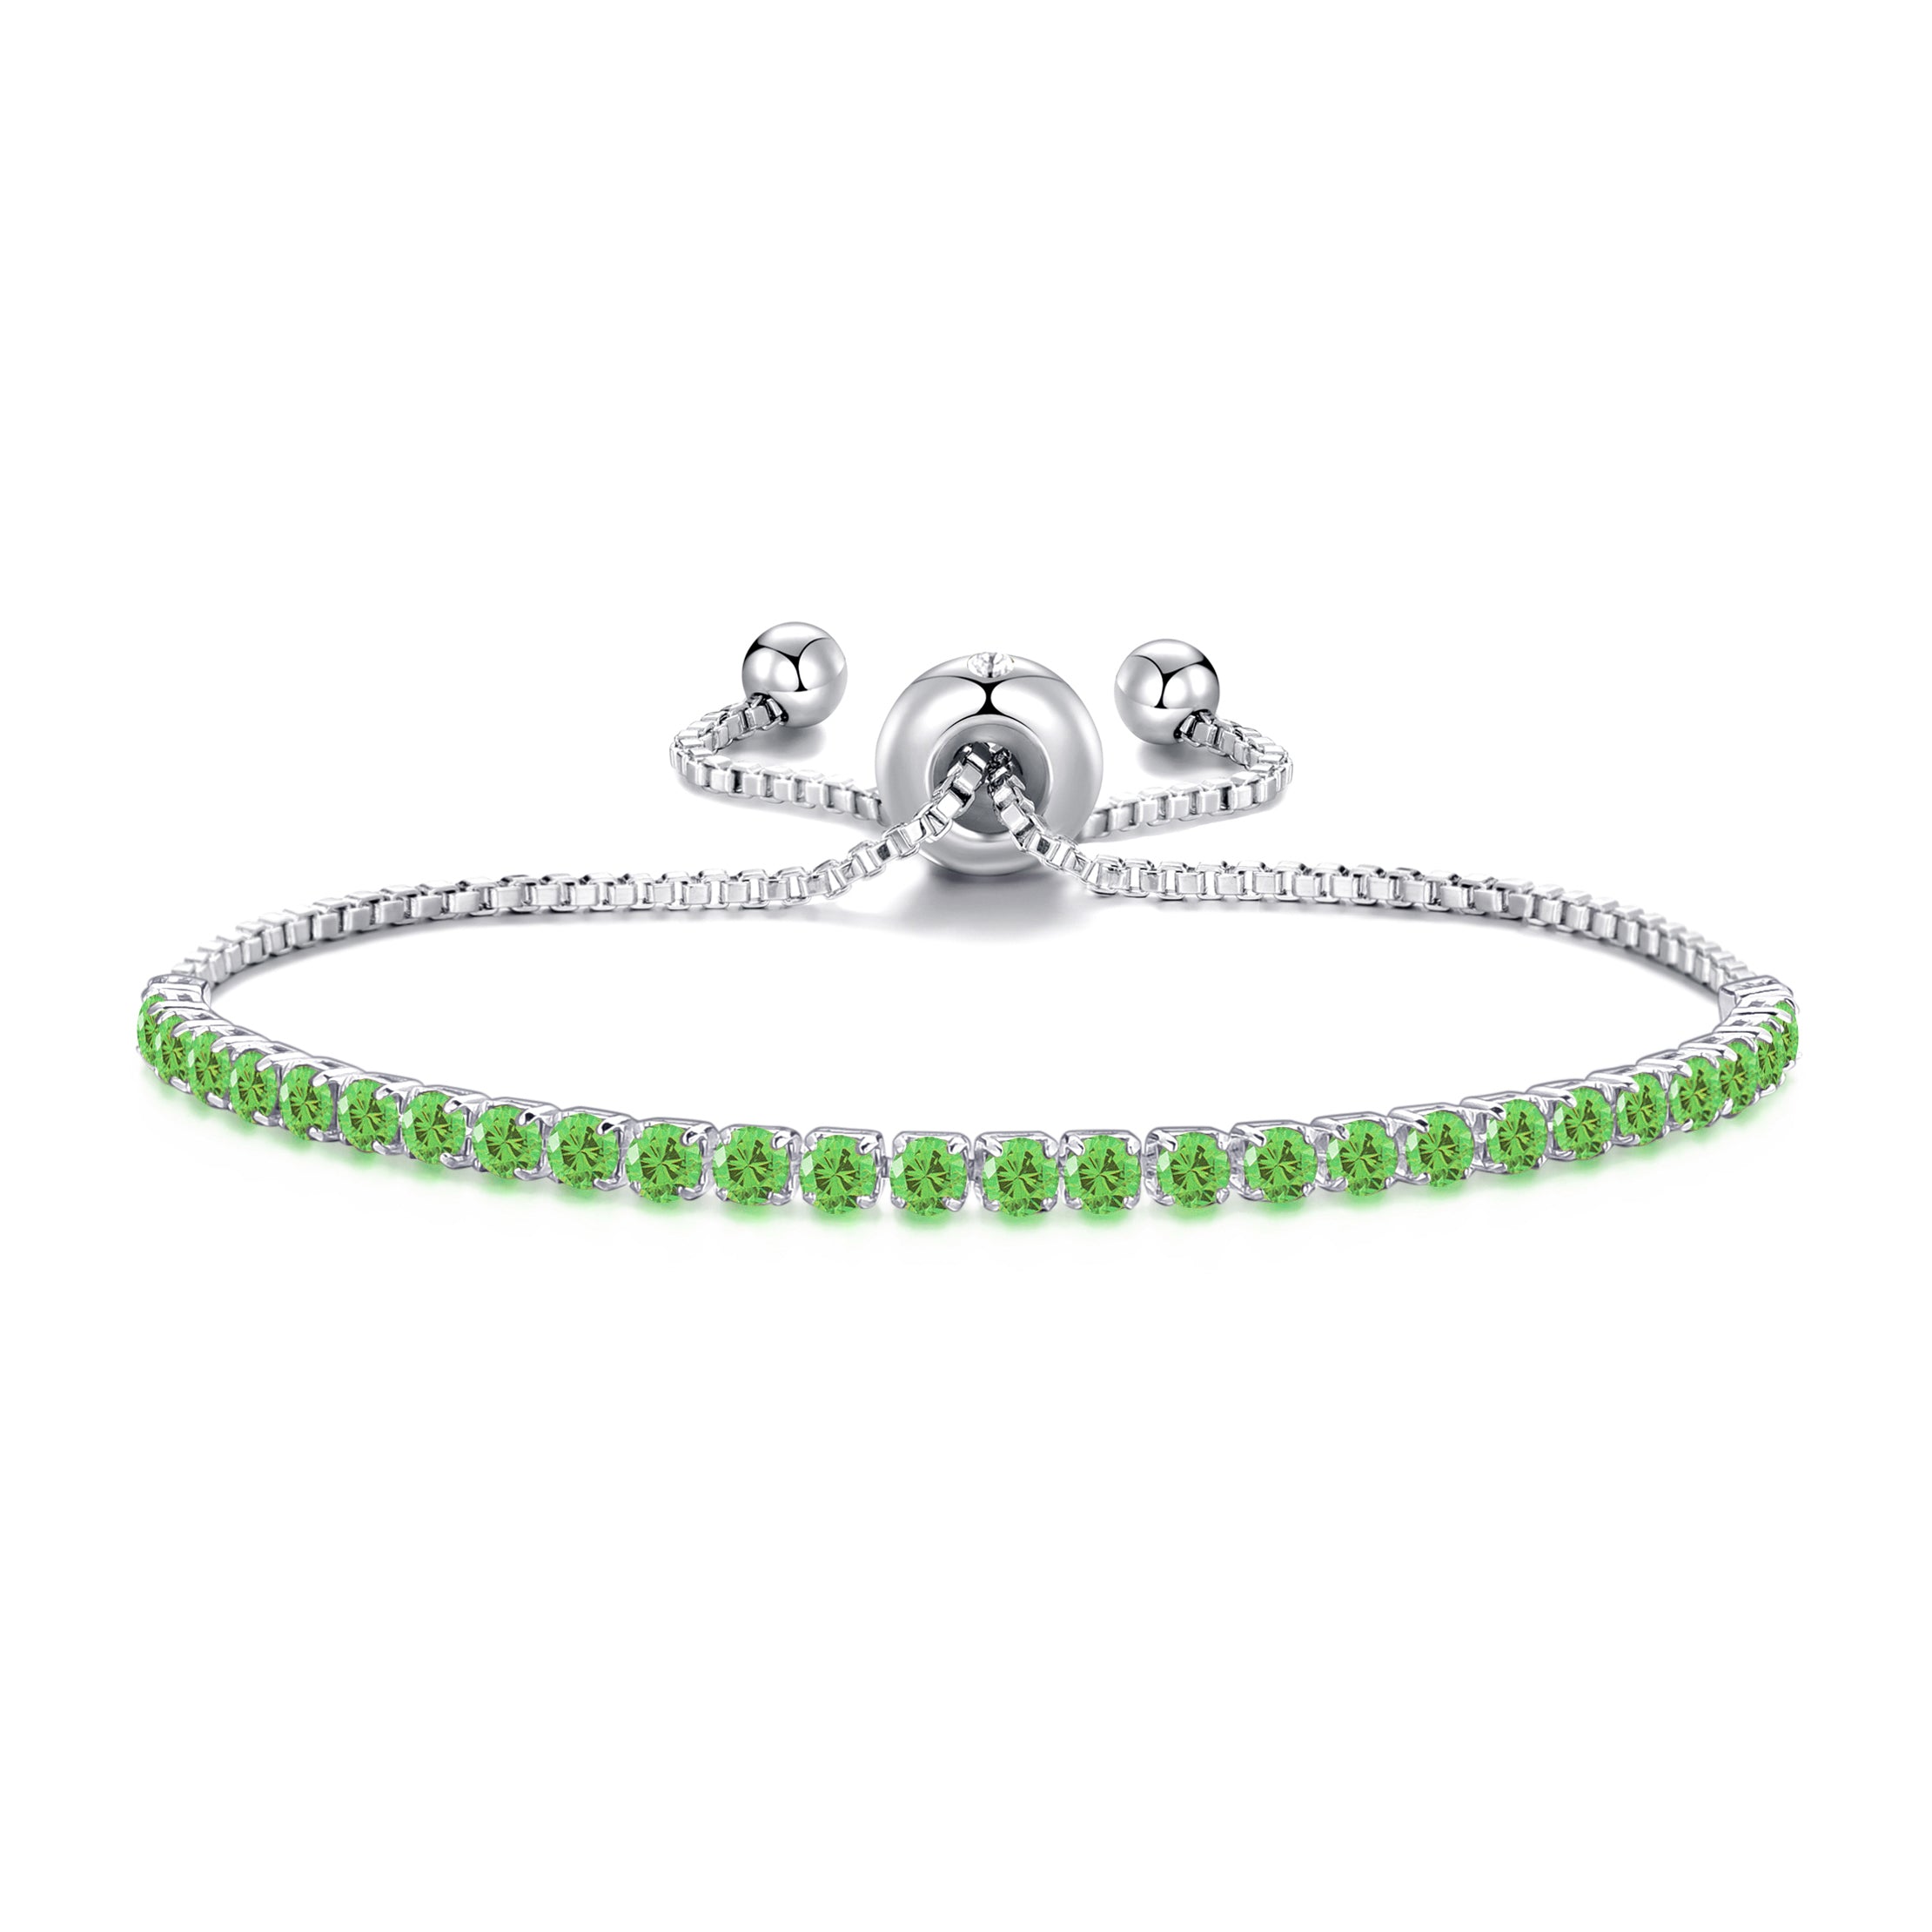 August Birthstone Friendship Bracelet with Peridot Zircondia® Crystals